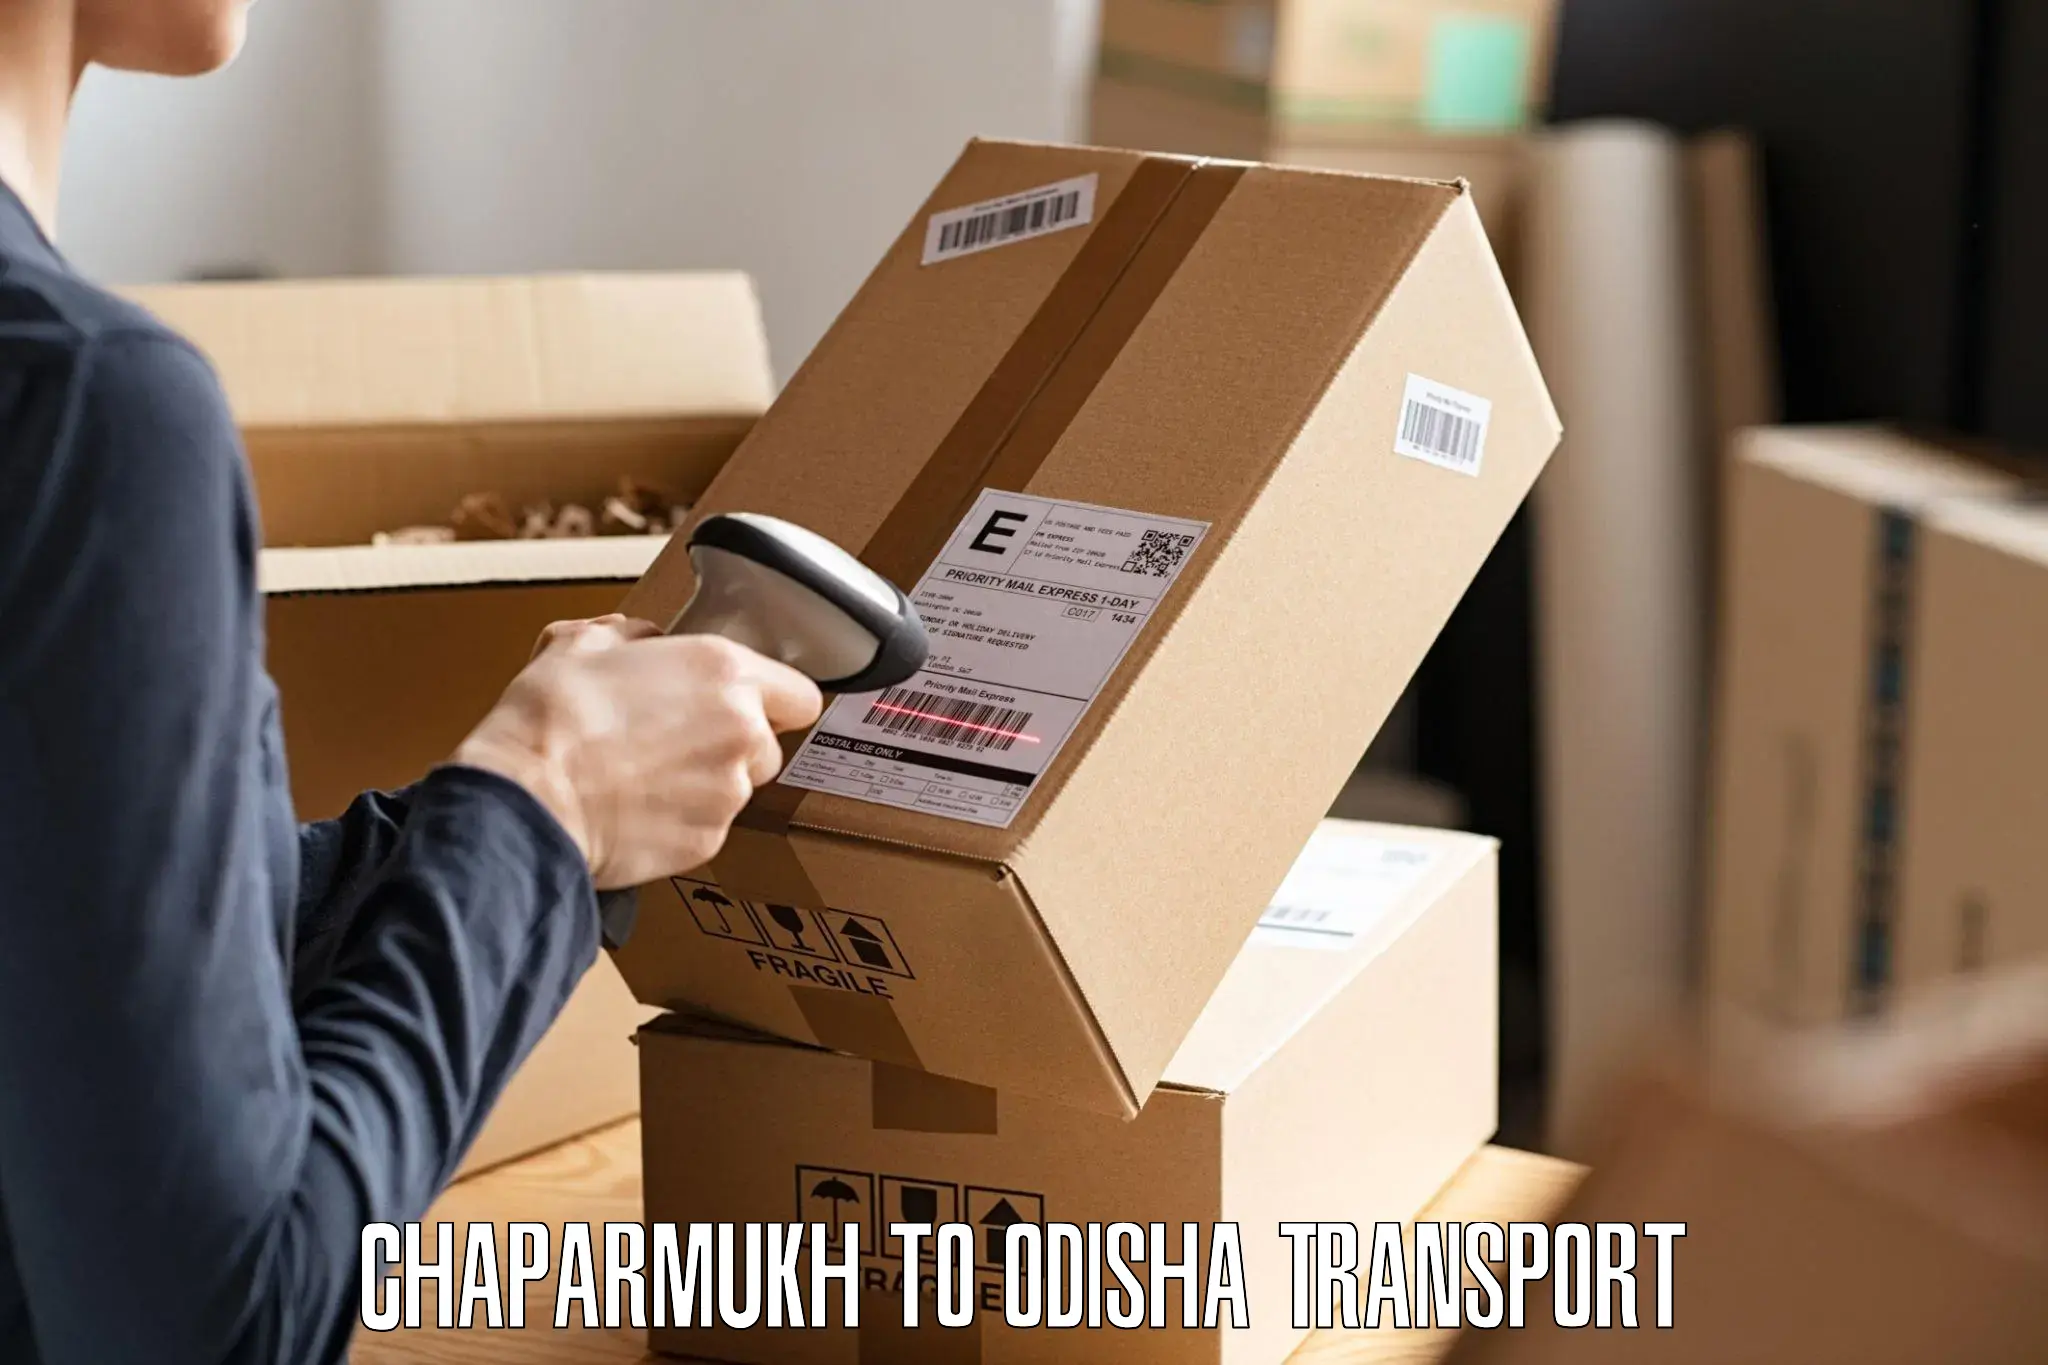 Air freight transport services Chaparmukh to Kishorenagar